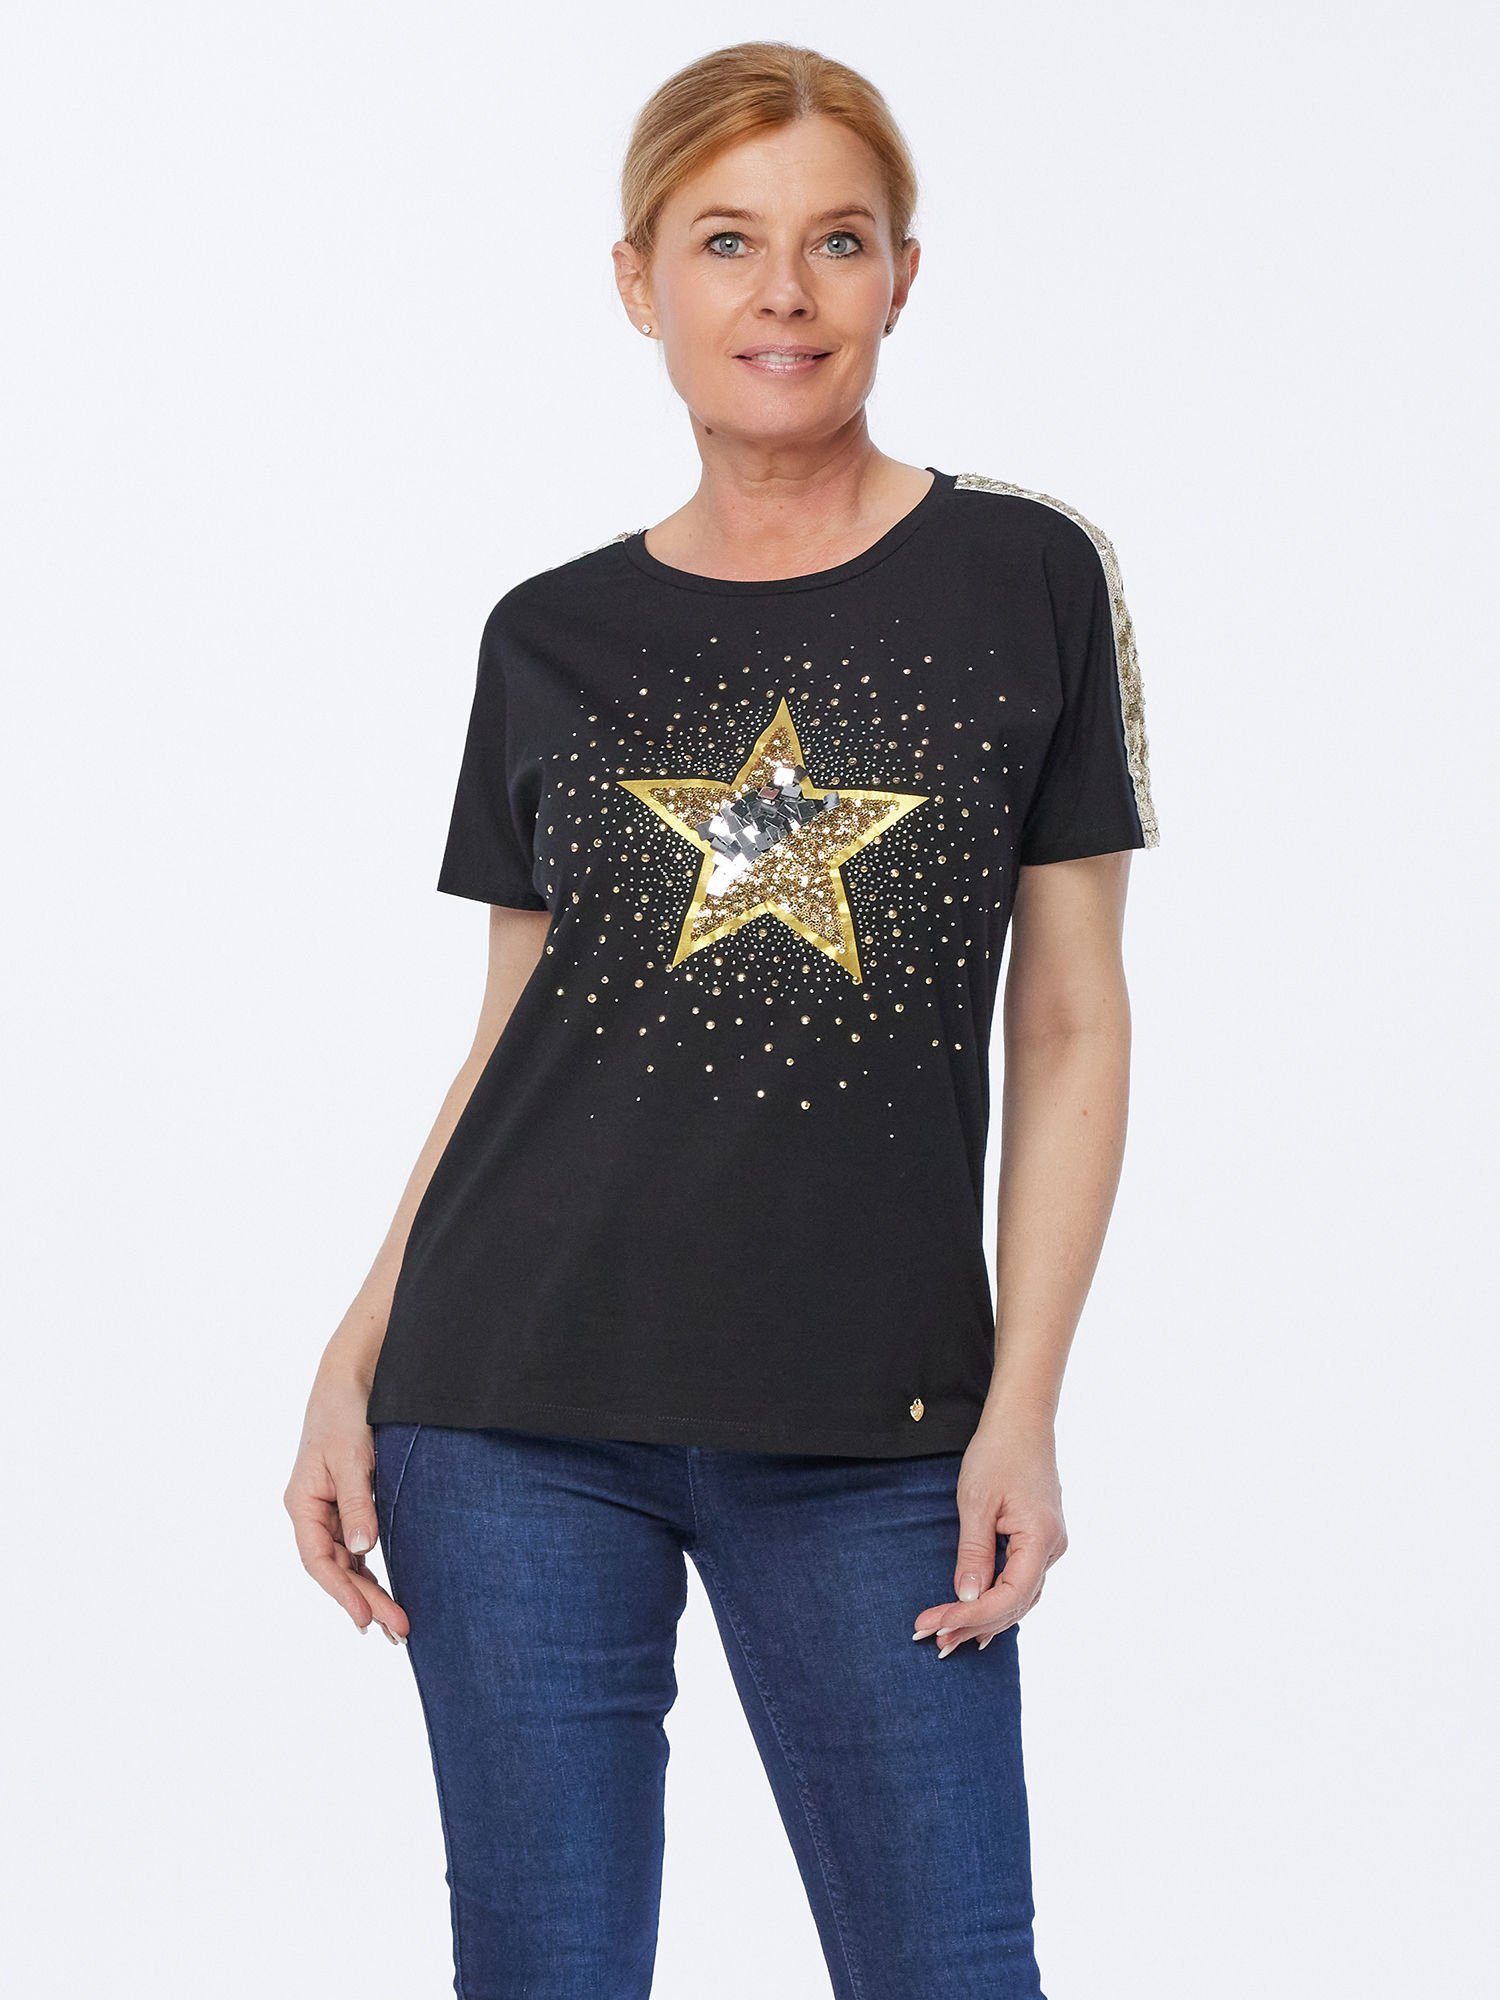 Christian Materne T-Shirt Kurzarmbluse schwarz Stern-Motiv mit